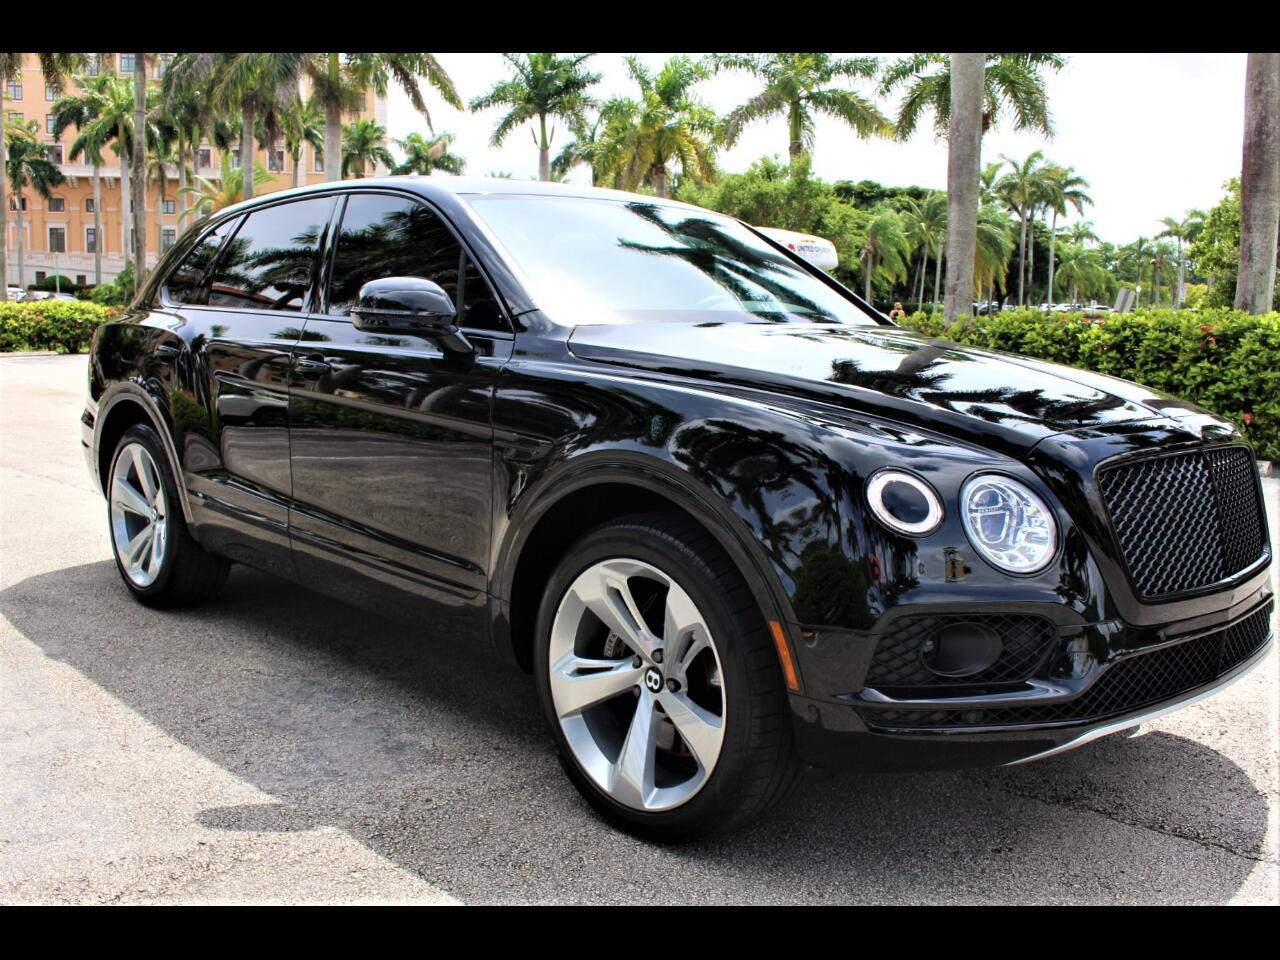 Used Bentley Bentayga Miami Fl